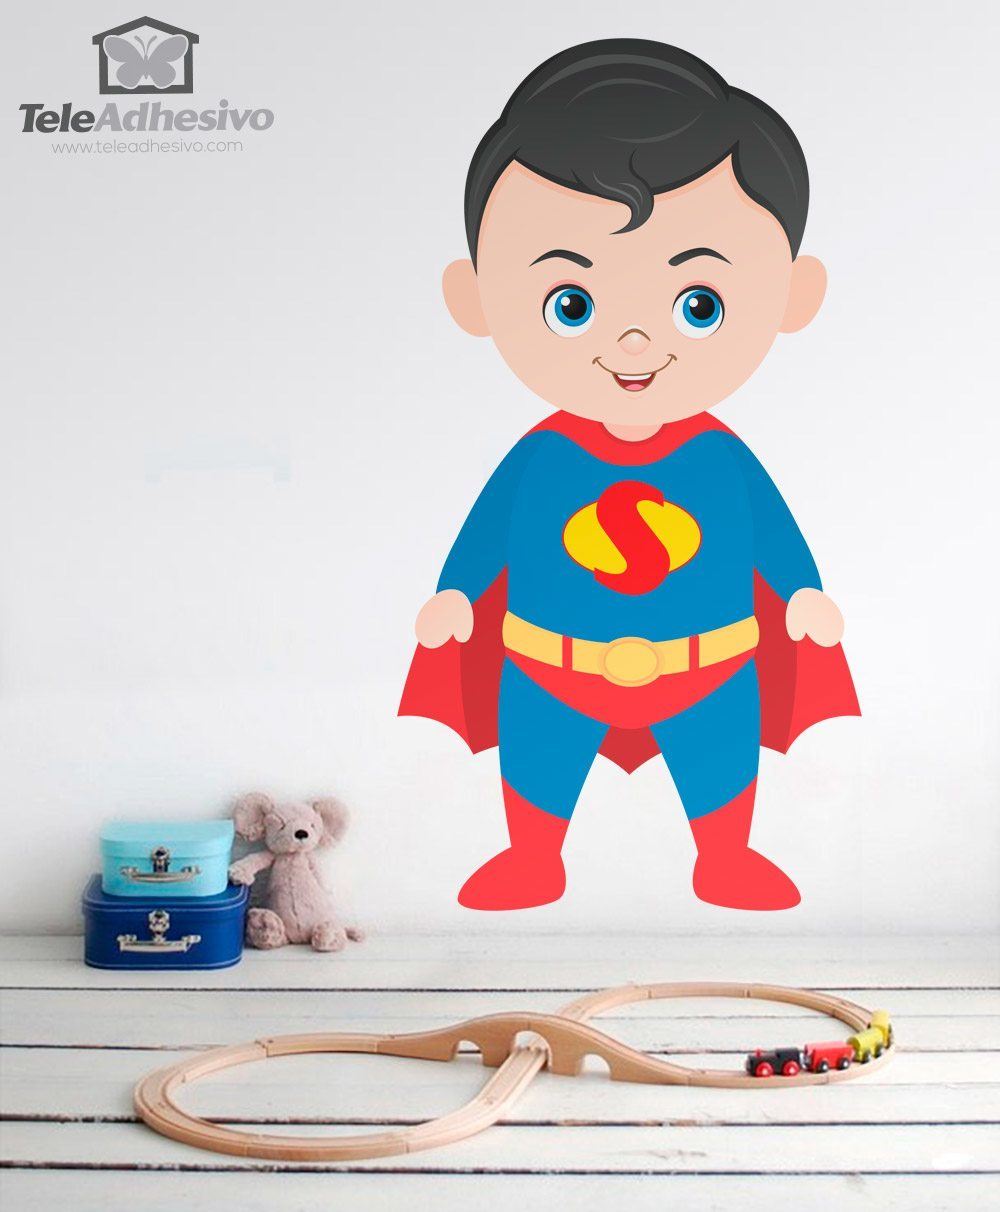 Sticker mural enfant Superman volant